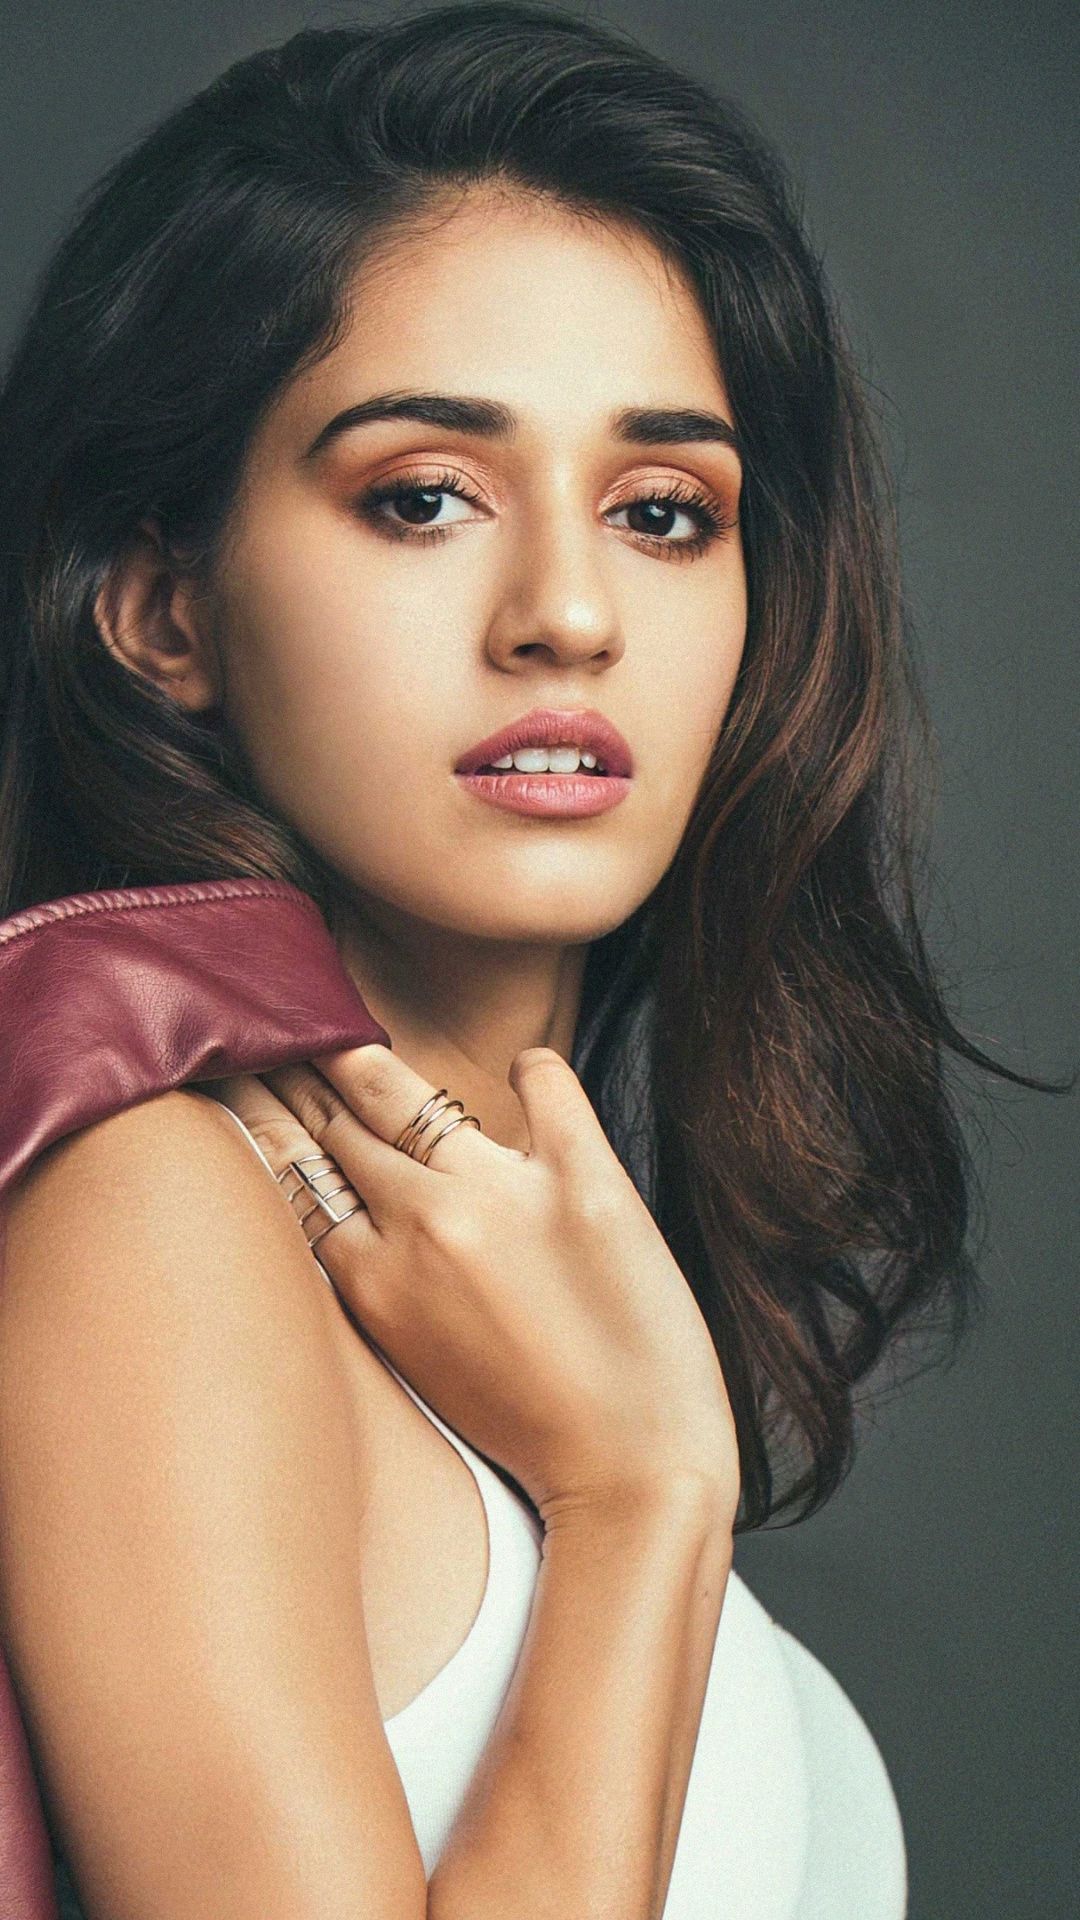 40+] Bollywood Actress 2019 Wallpapers - WallpaperSafari